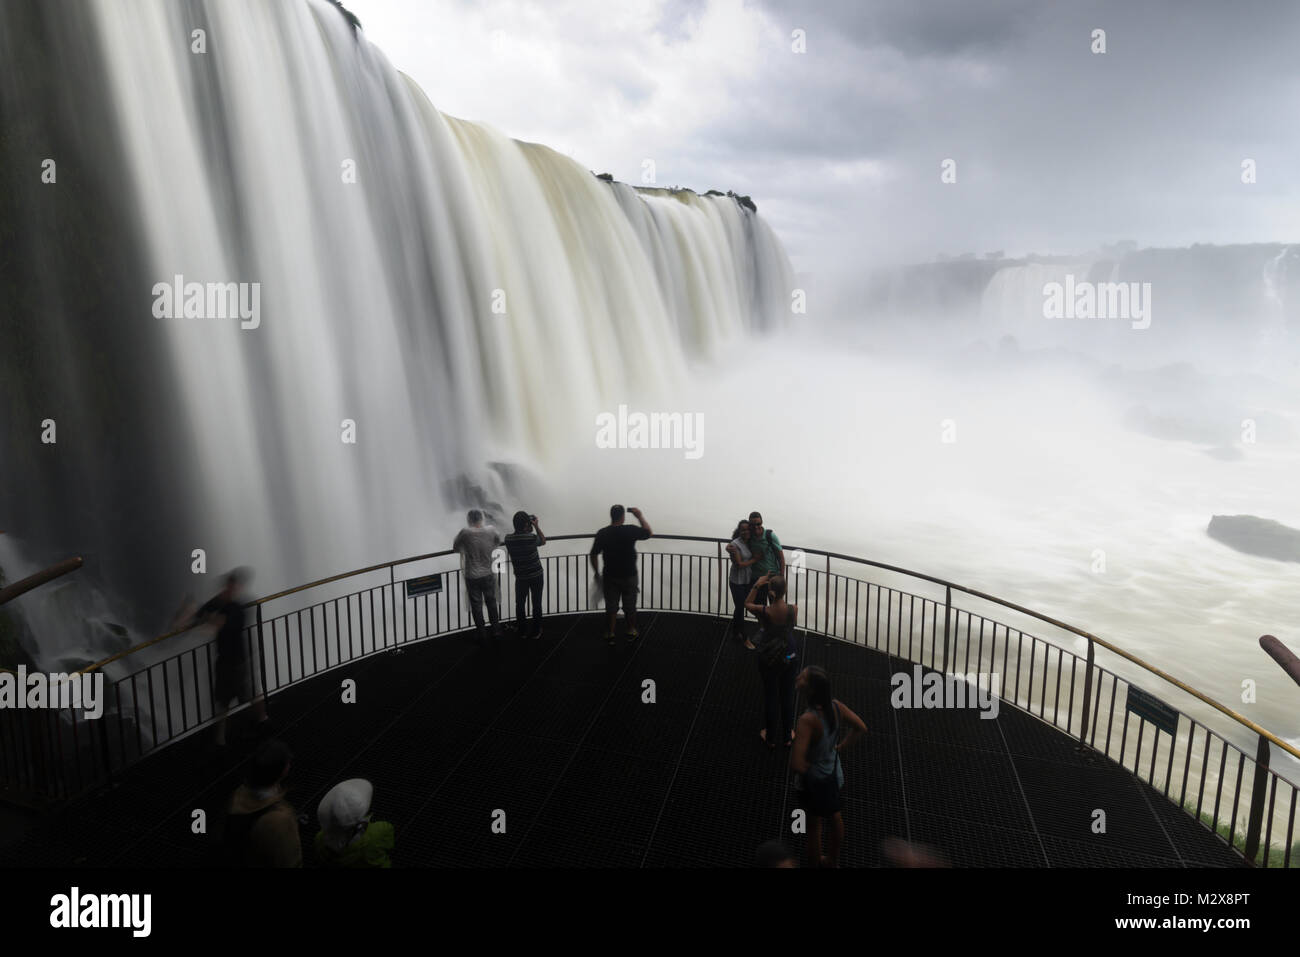 people taking photos at The Iguazu Falls, Brazil Stock Photo